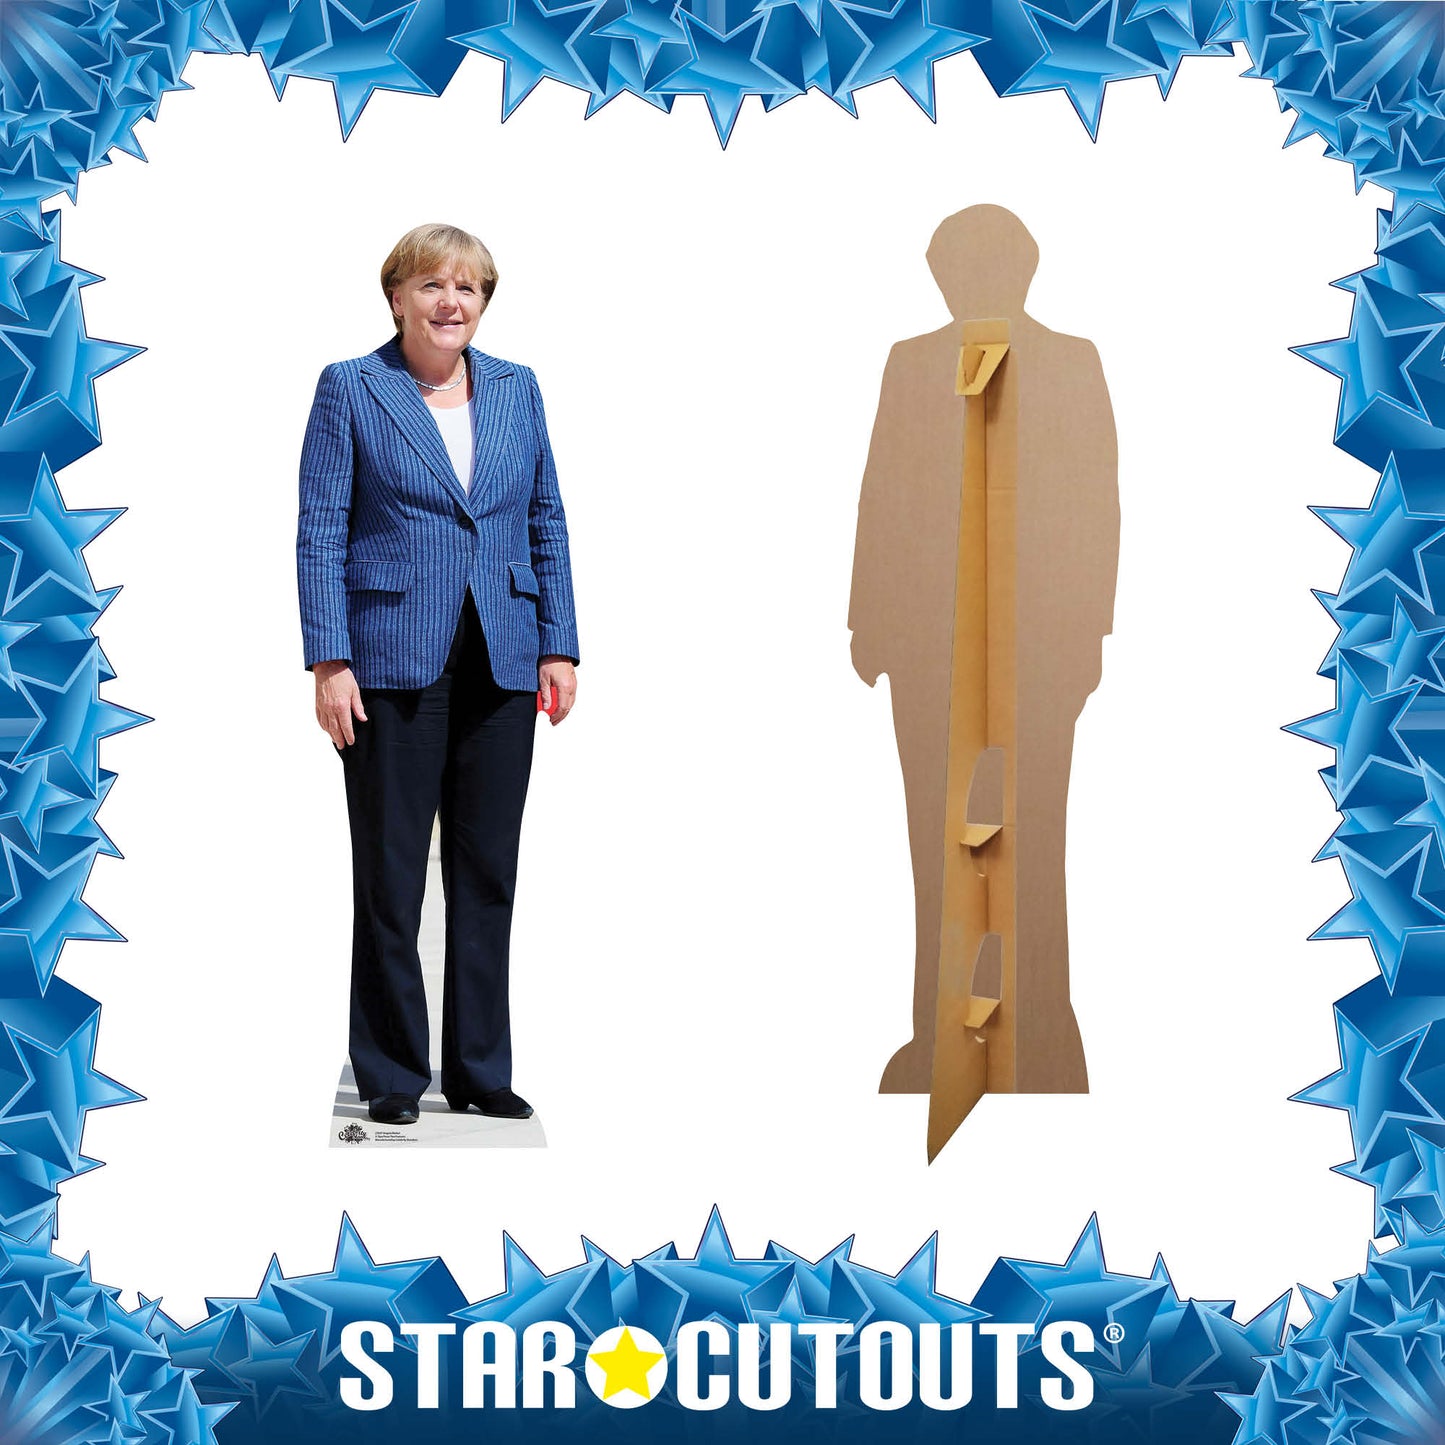 German Chancellor  Angela Merkel Cardboard Cutout Politician